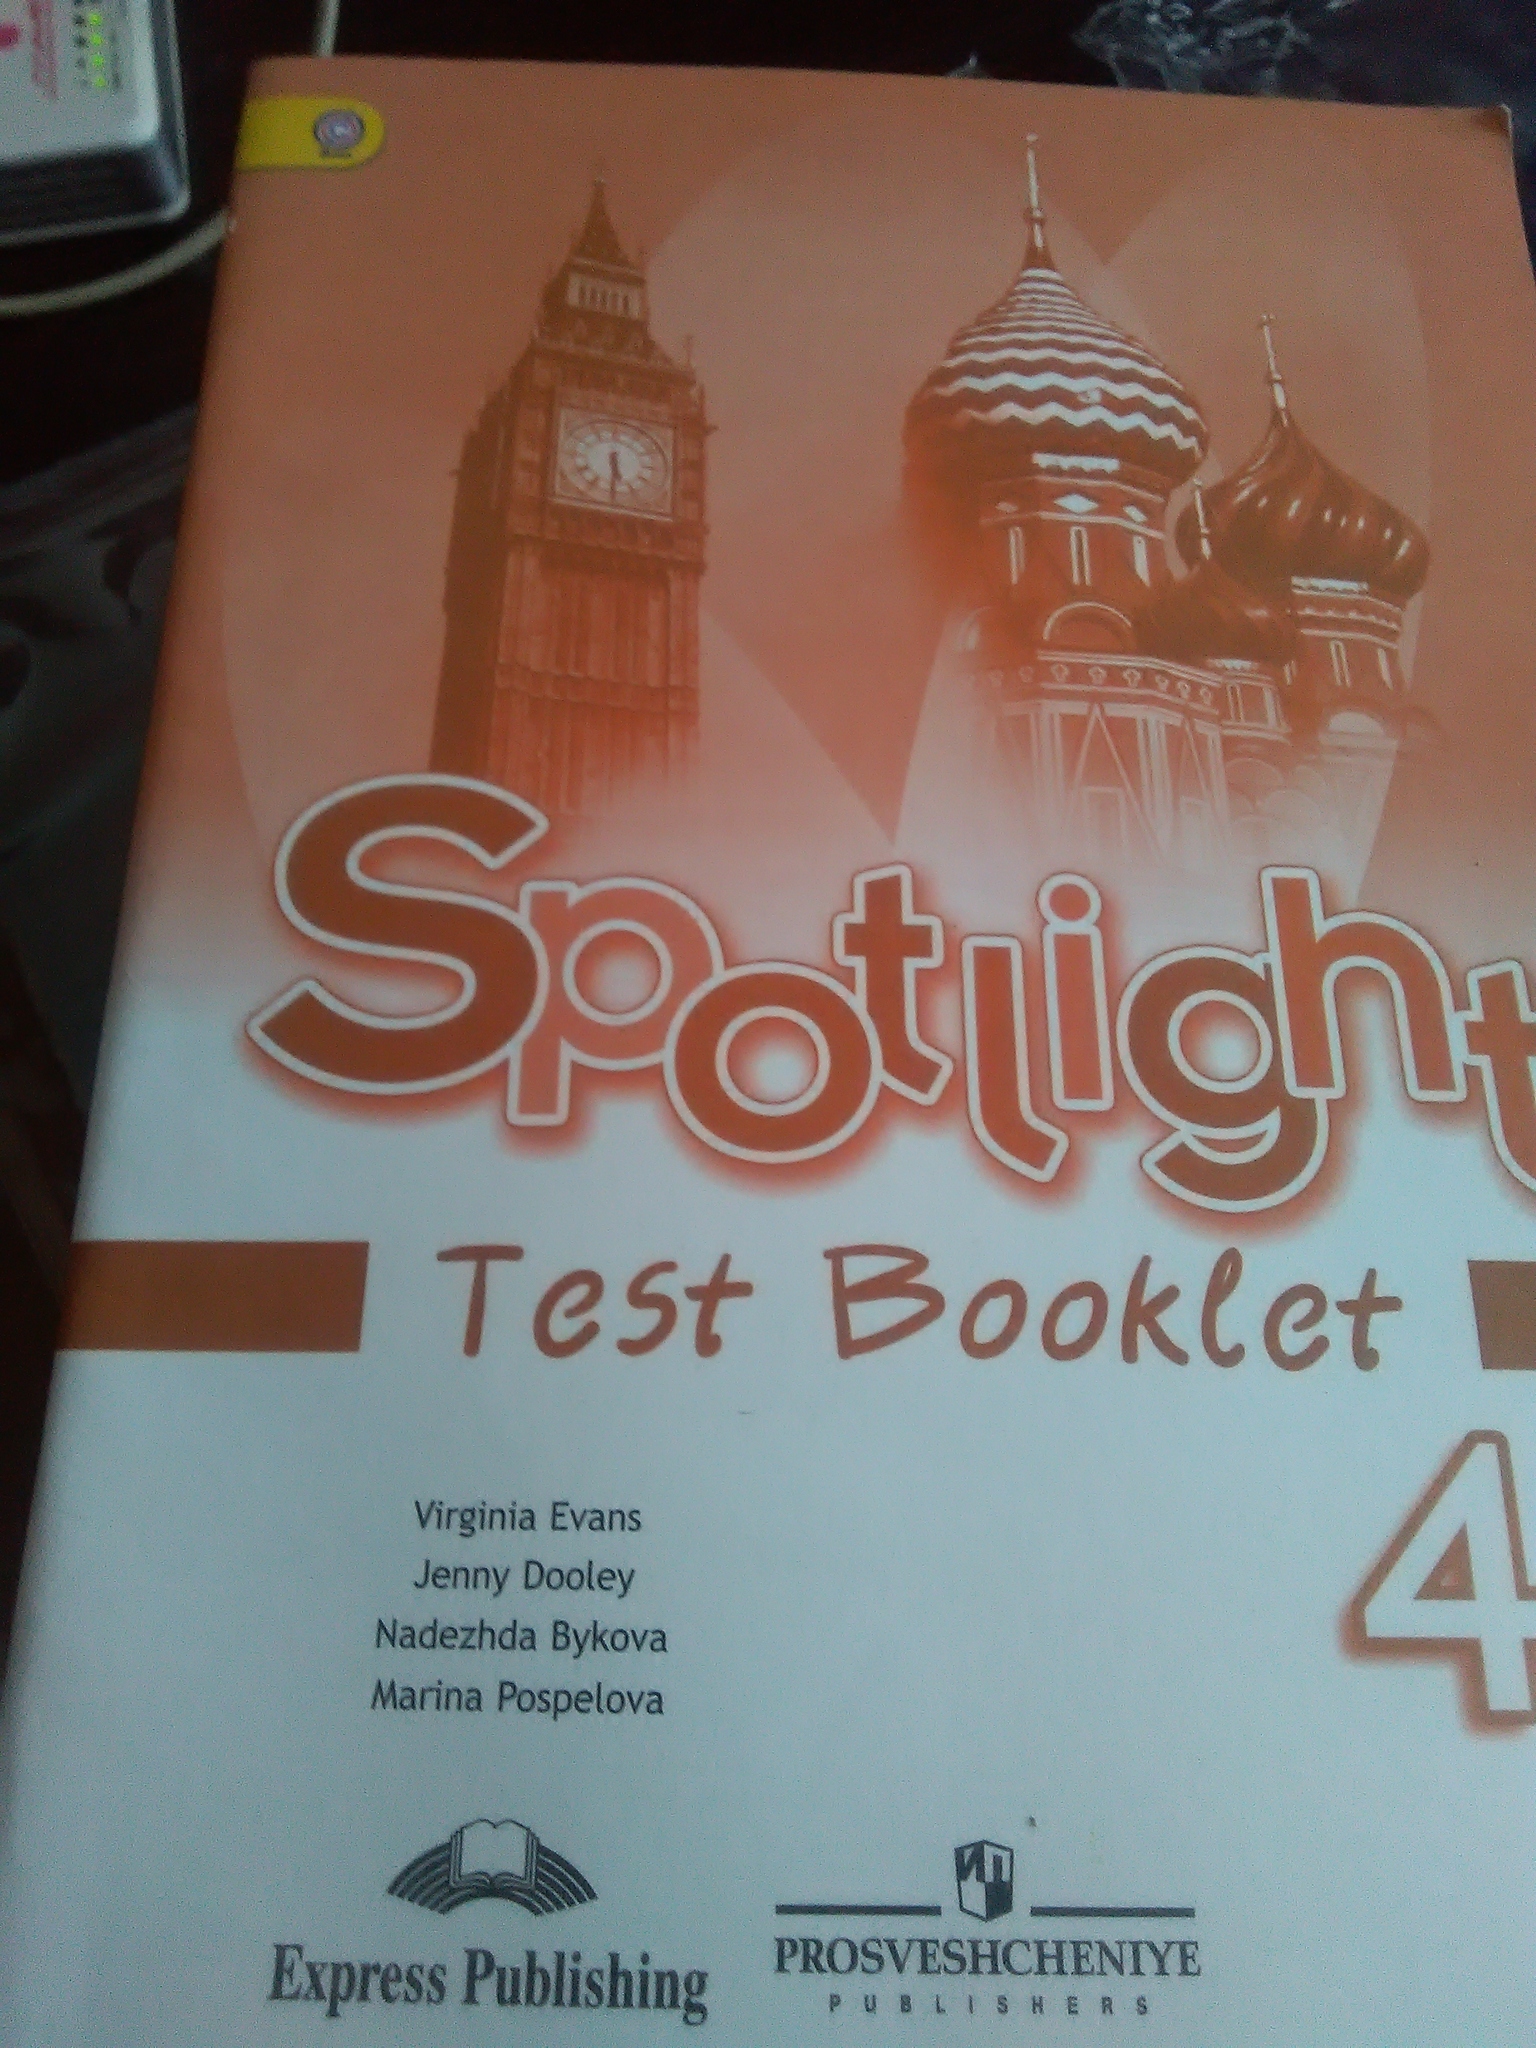 Английский 5 класс тестовая тетрадь. Спотлайт 4 класс тест буклет. Test booklet 4 класс Spotlight. Spotlight 4 Test booklet английский. Спотлайт 4 Test booklet.